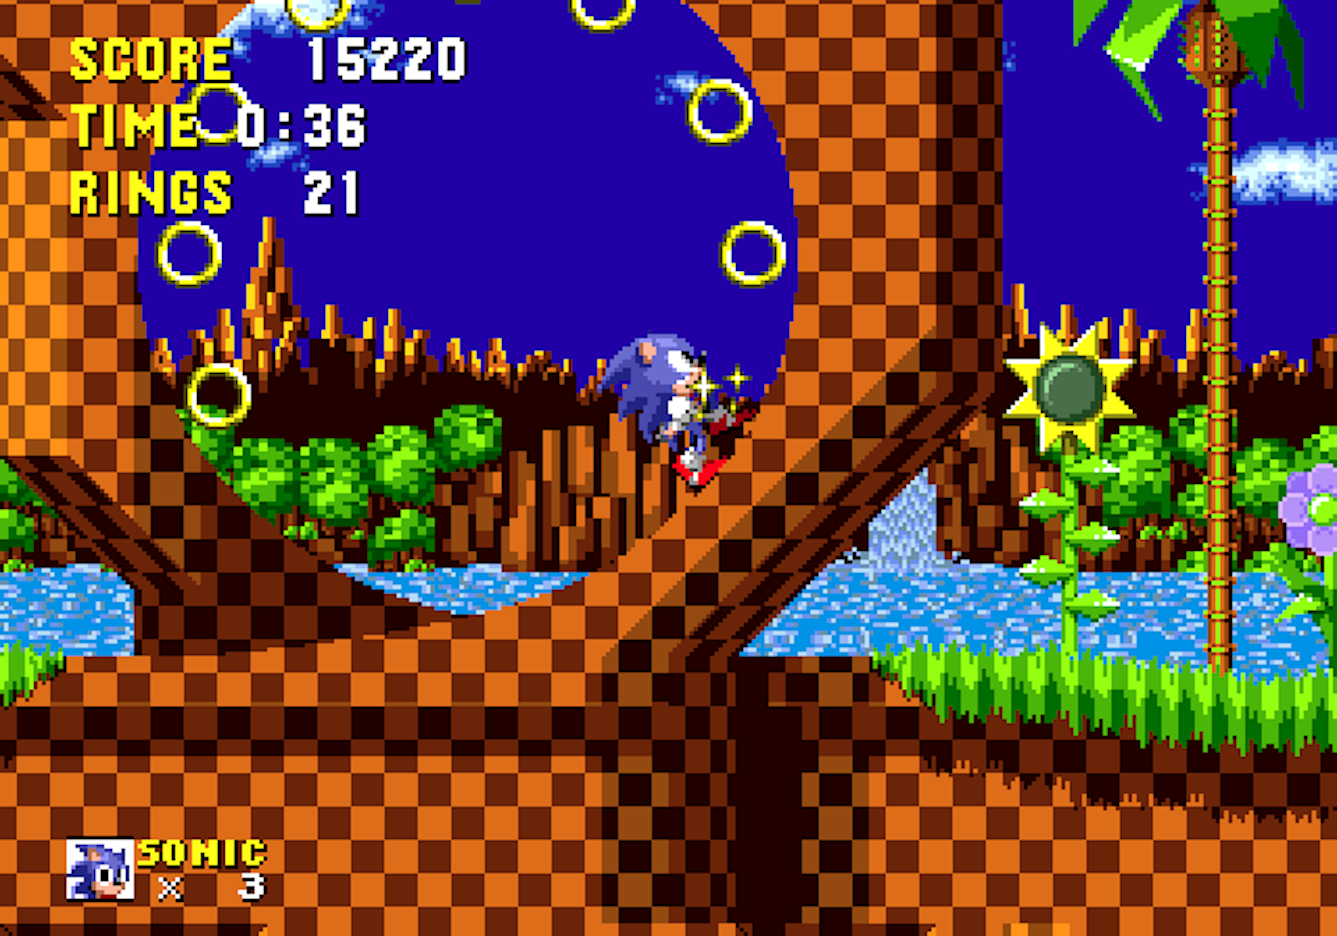 Sonic the Hedgehog (Green Hill Zone Loop)